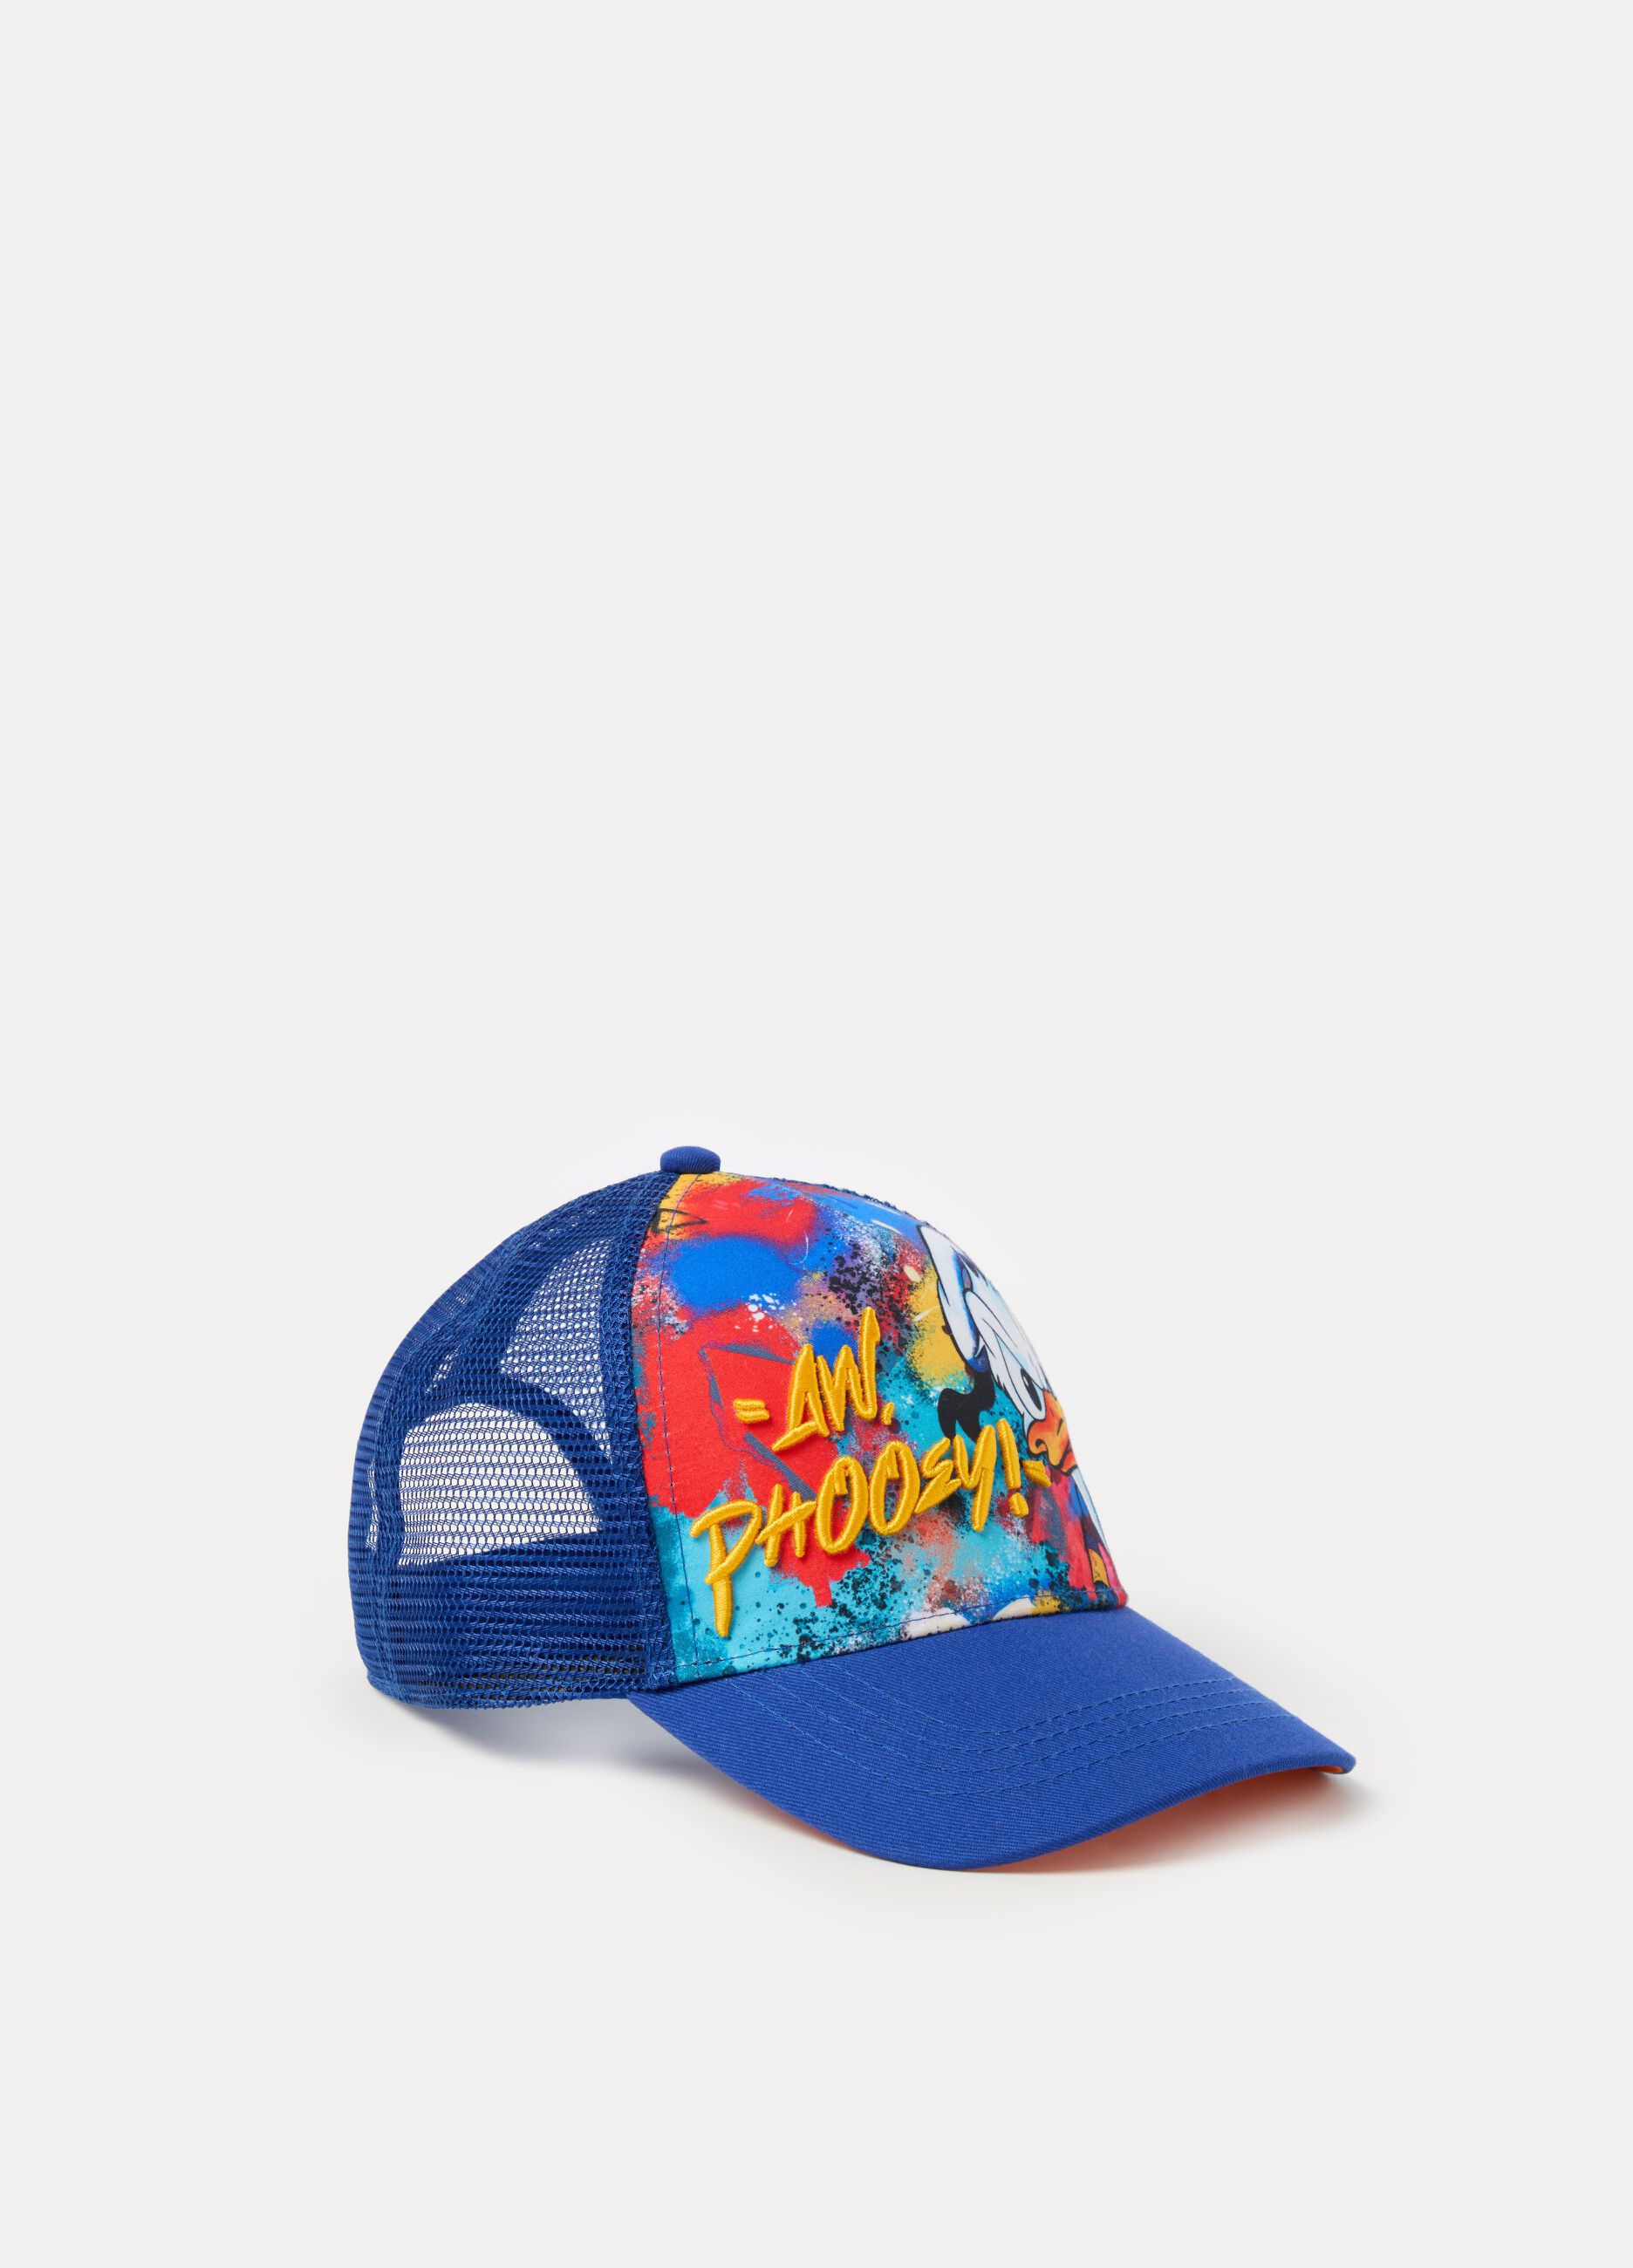 Baseball cap with Donald Duck 90 print